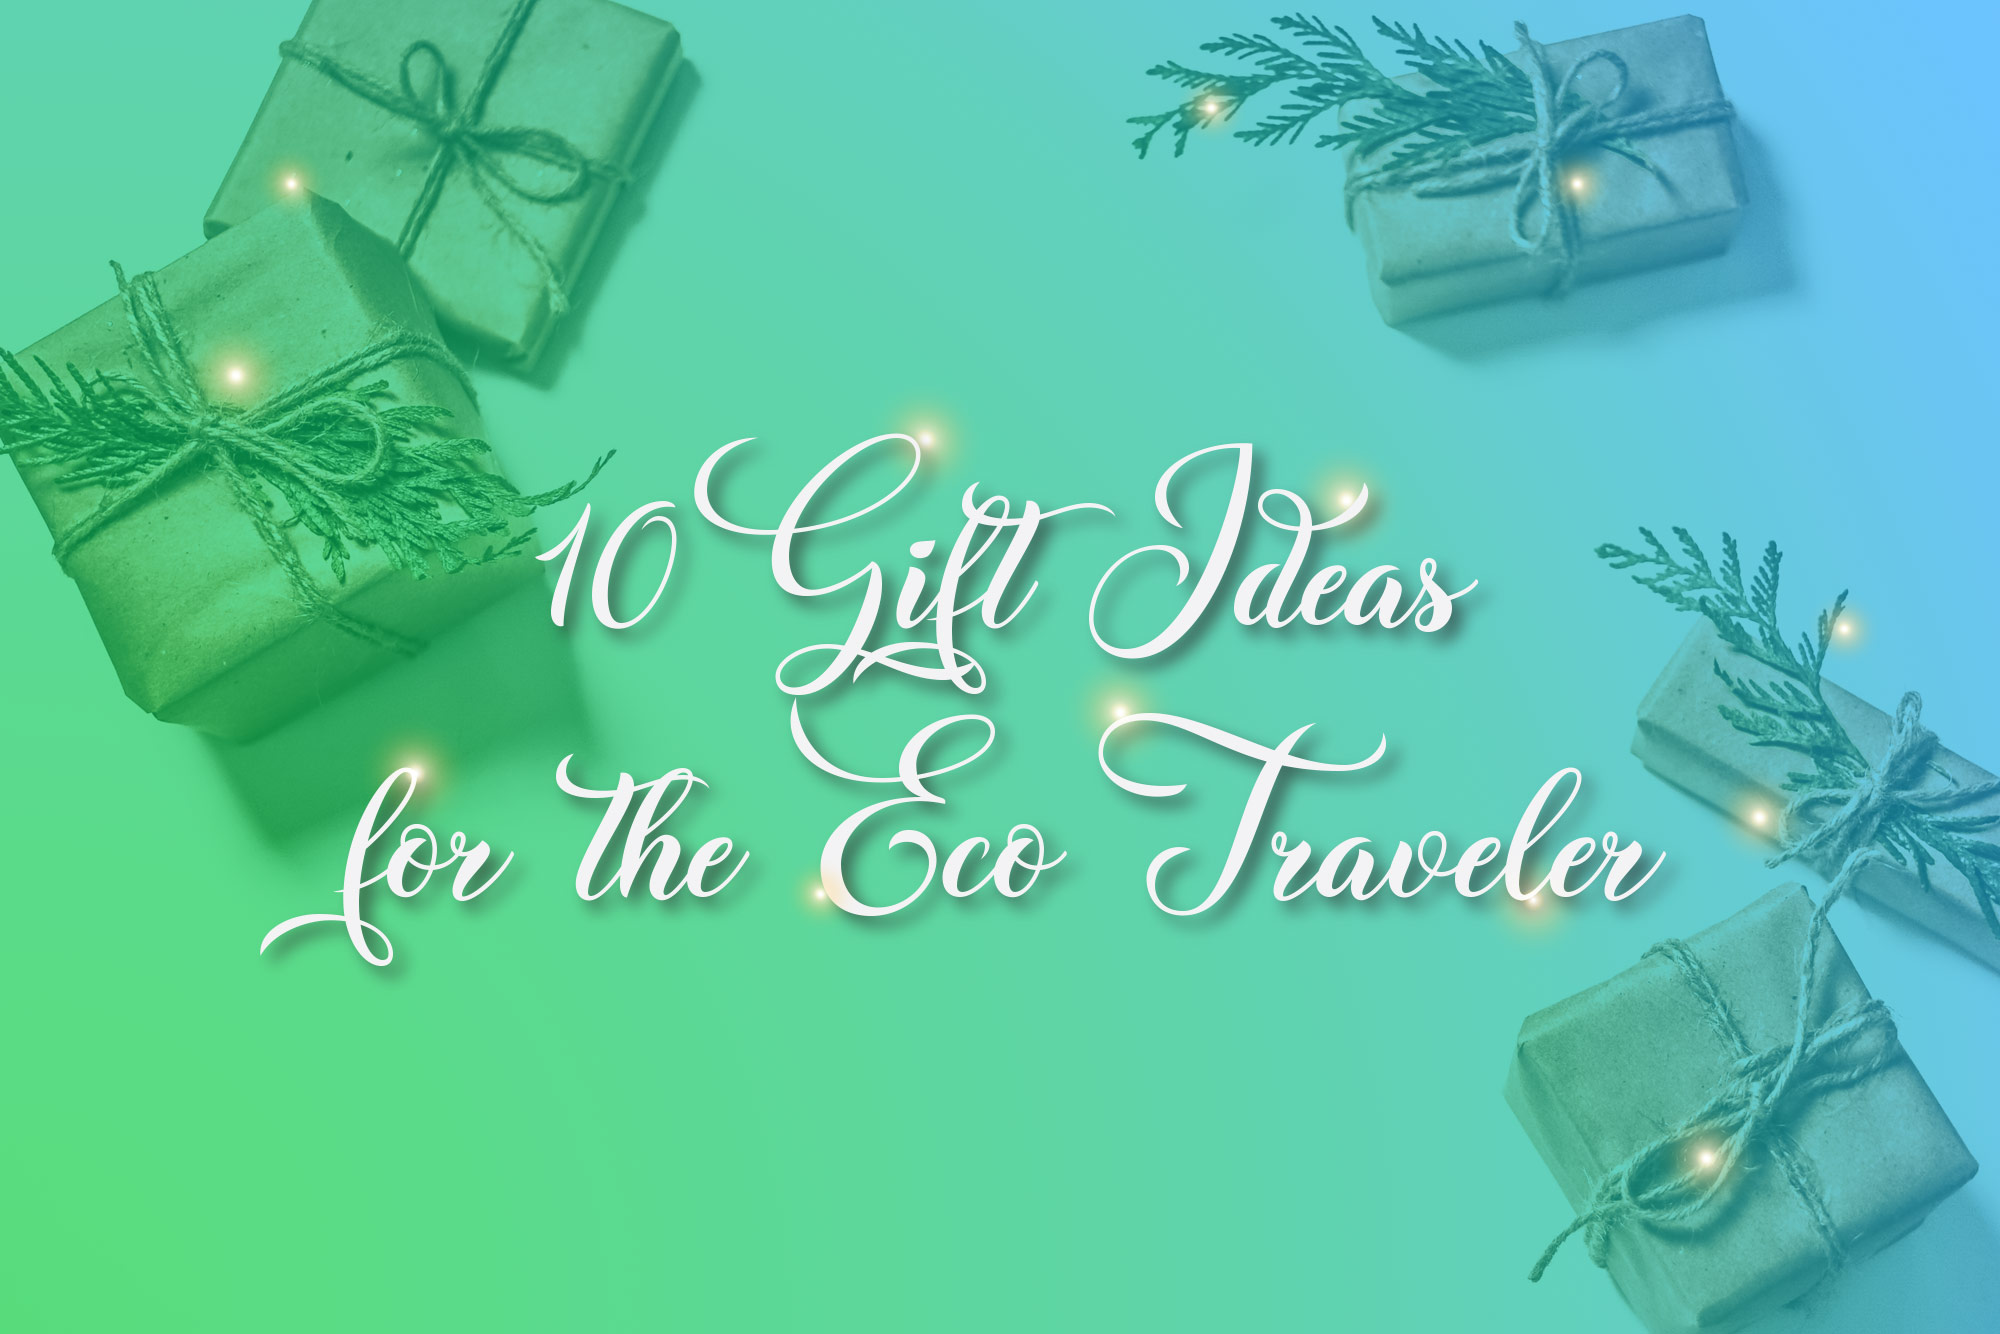 10 Gift Ideas for the eco traveler